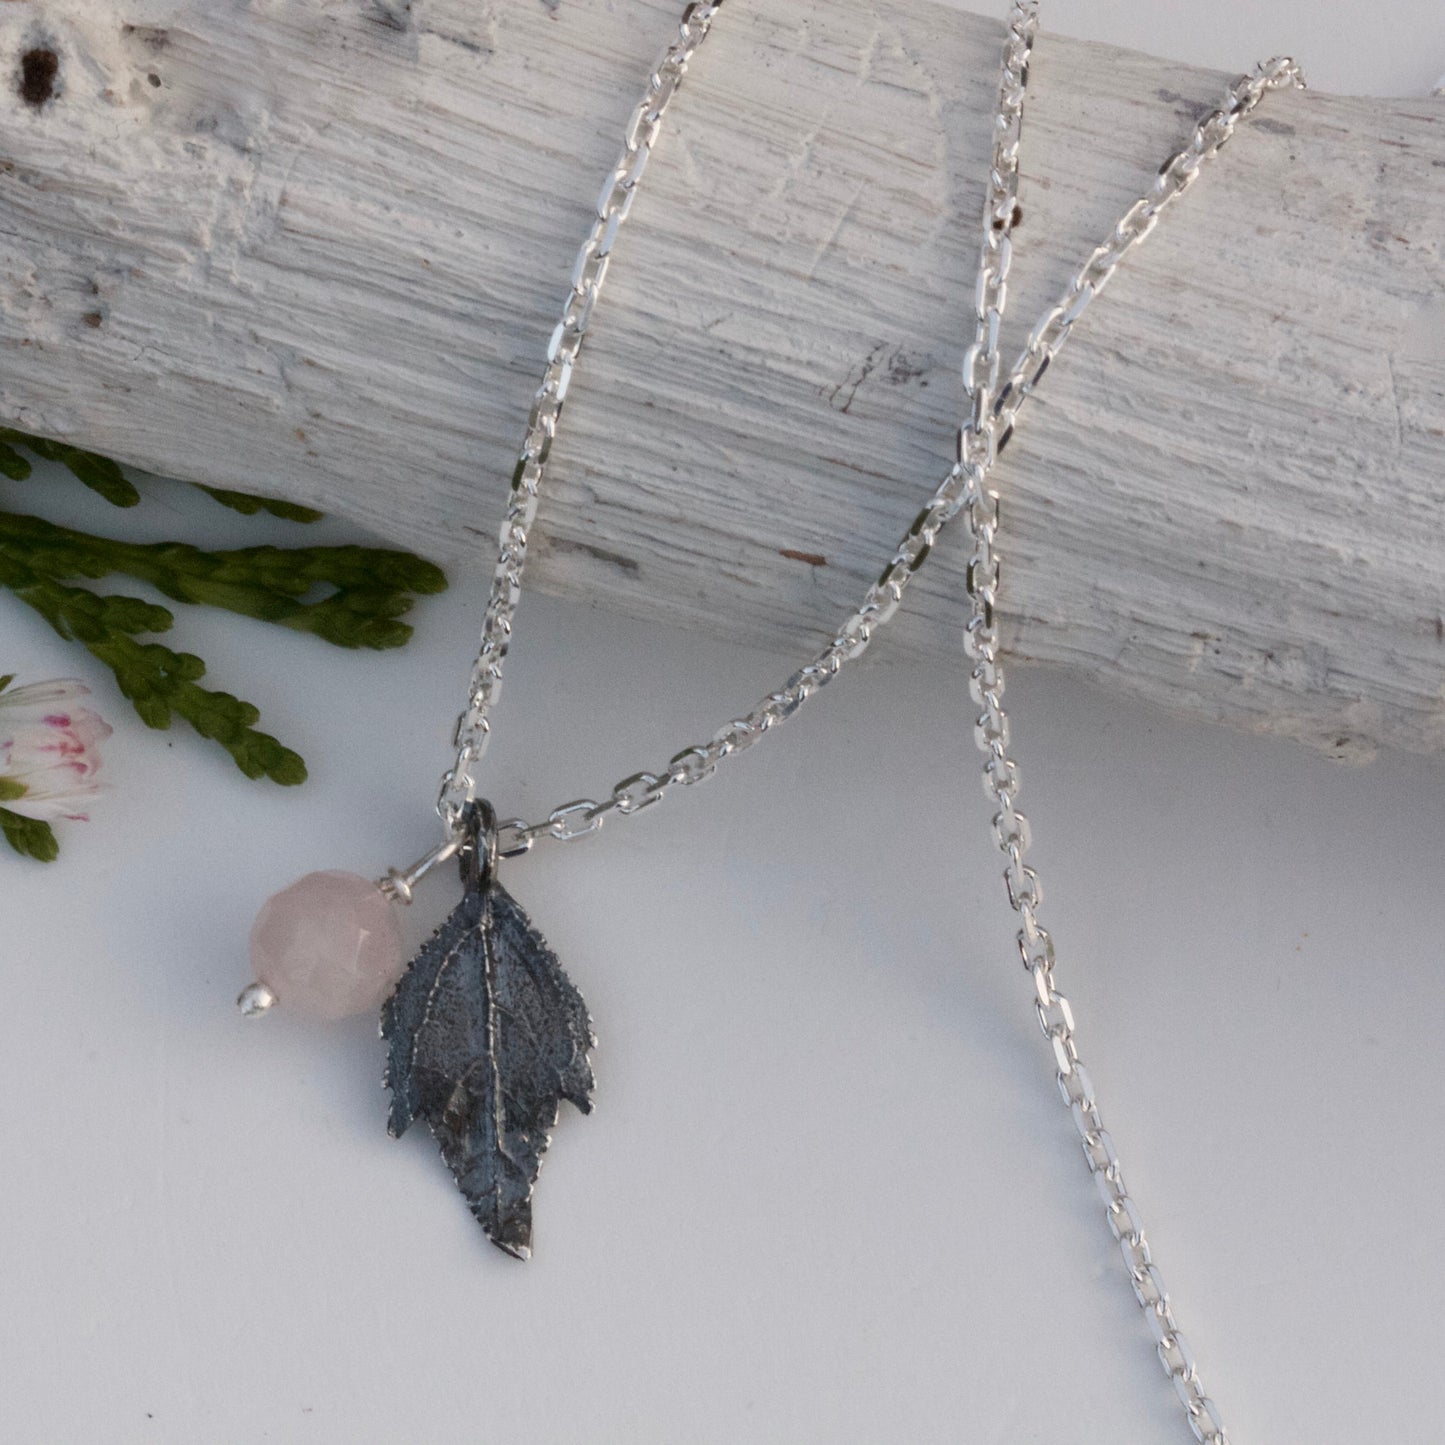 Personalised Leaf Necklace-Oxidised Silver Leaf Necklace-Monogram Pendant